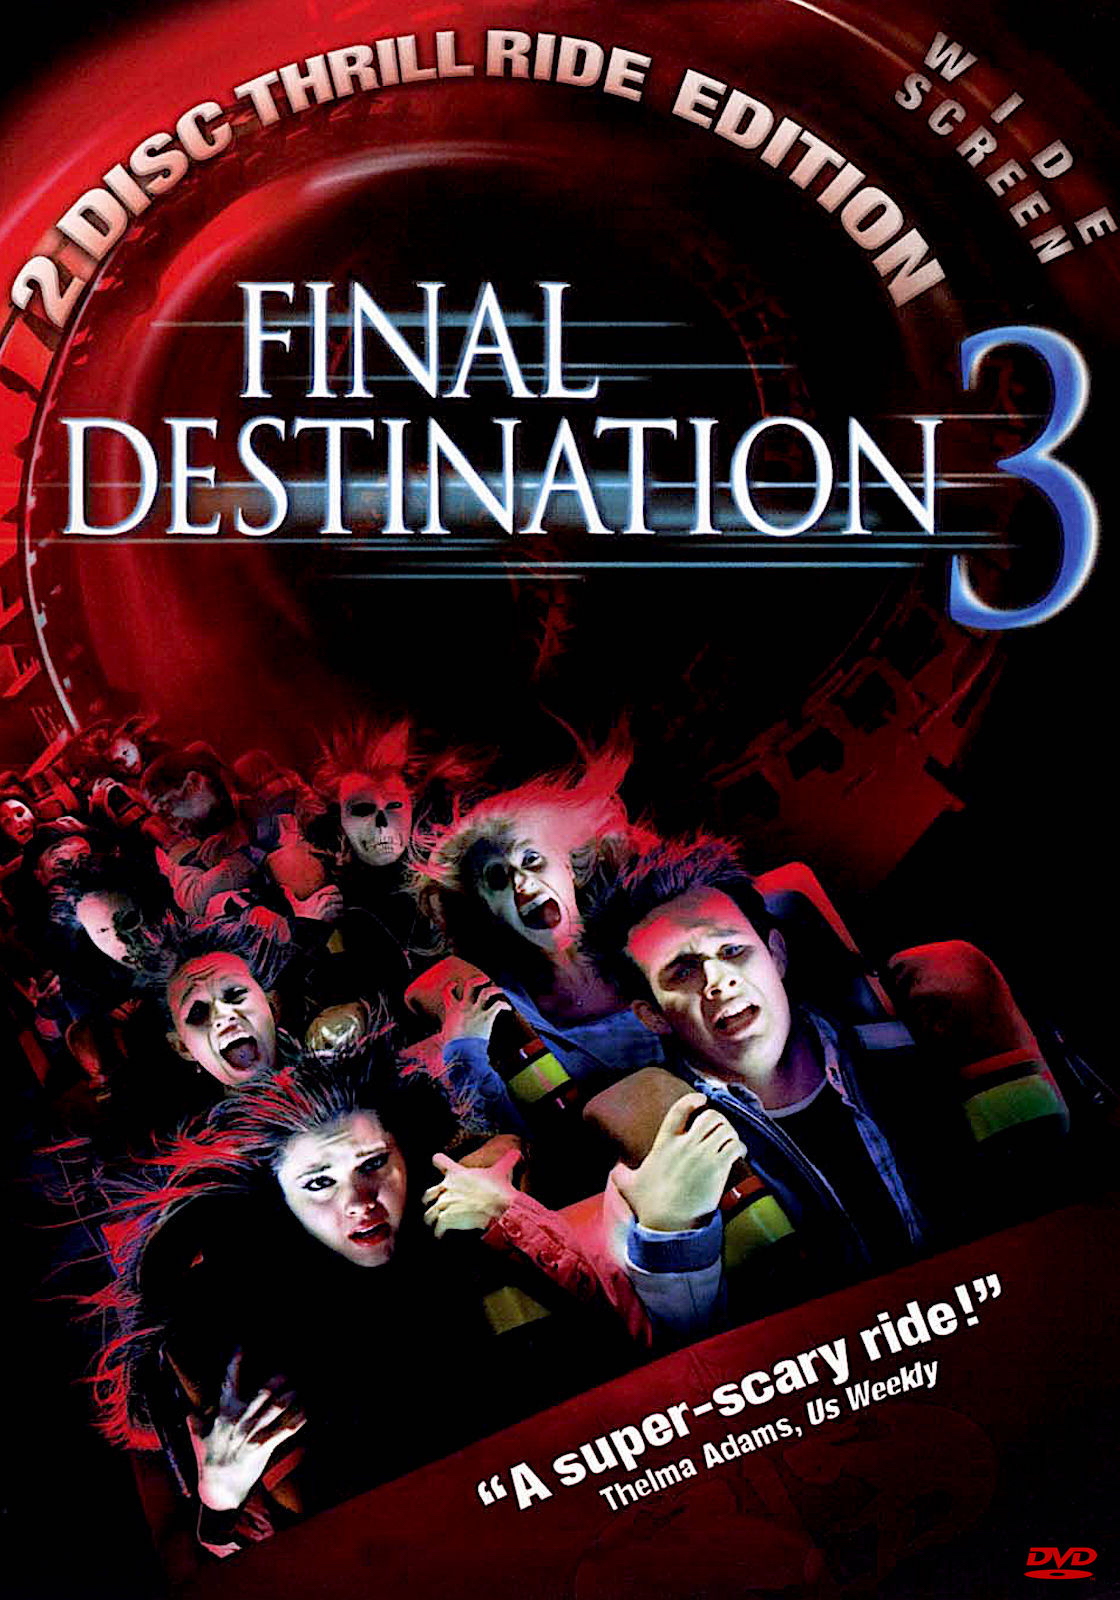 Final destination 3. Пункт назначения 3 американские горки. Final destination 3 -2006 poster. Пункт назначения хоррор.